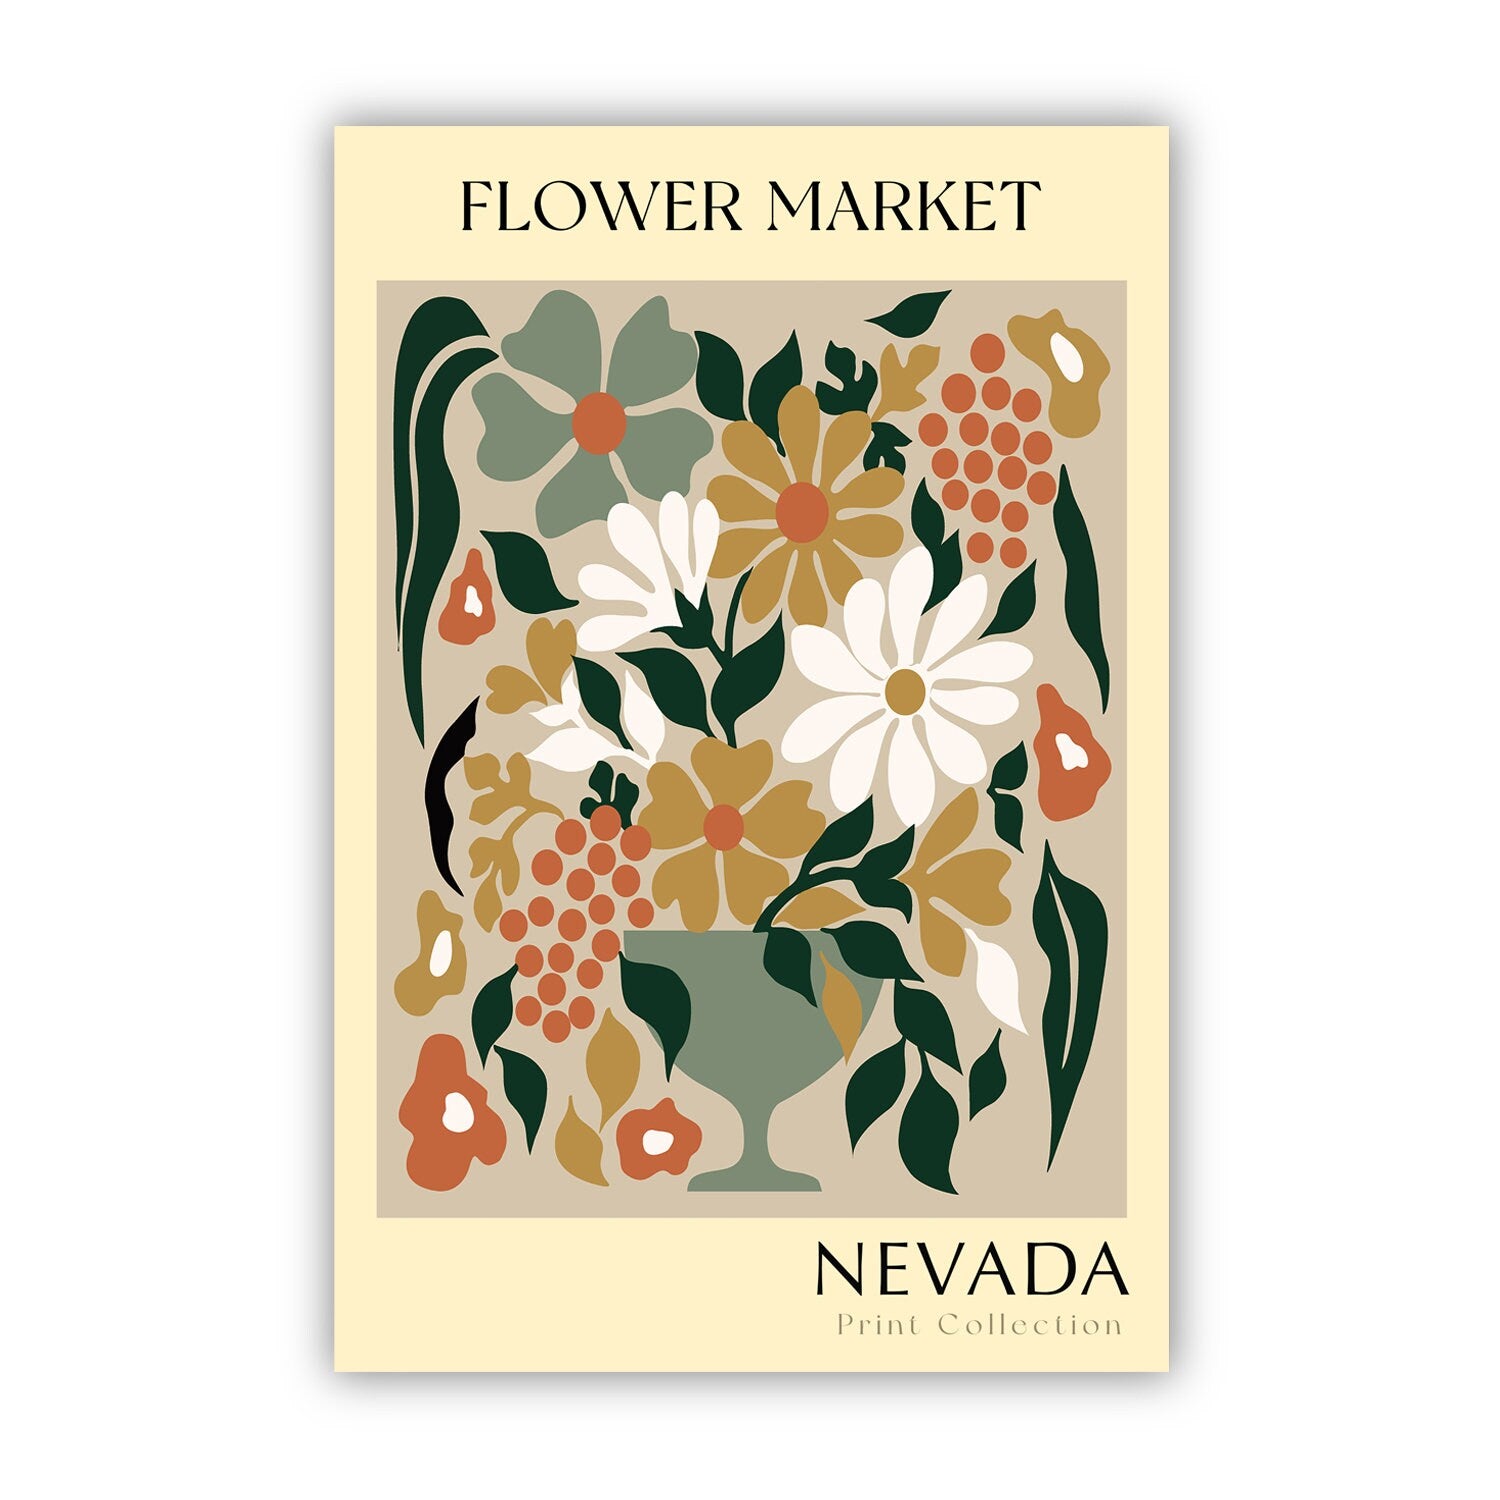 Nevada State flower print, USA states poster, Nevada flower market poster, Botanical posters, Nature poster artwork, Boho floral wall art